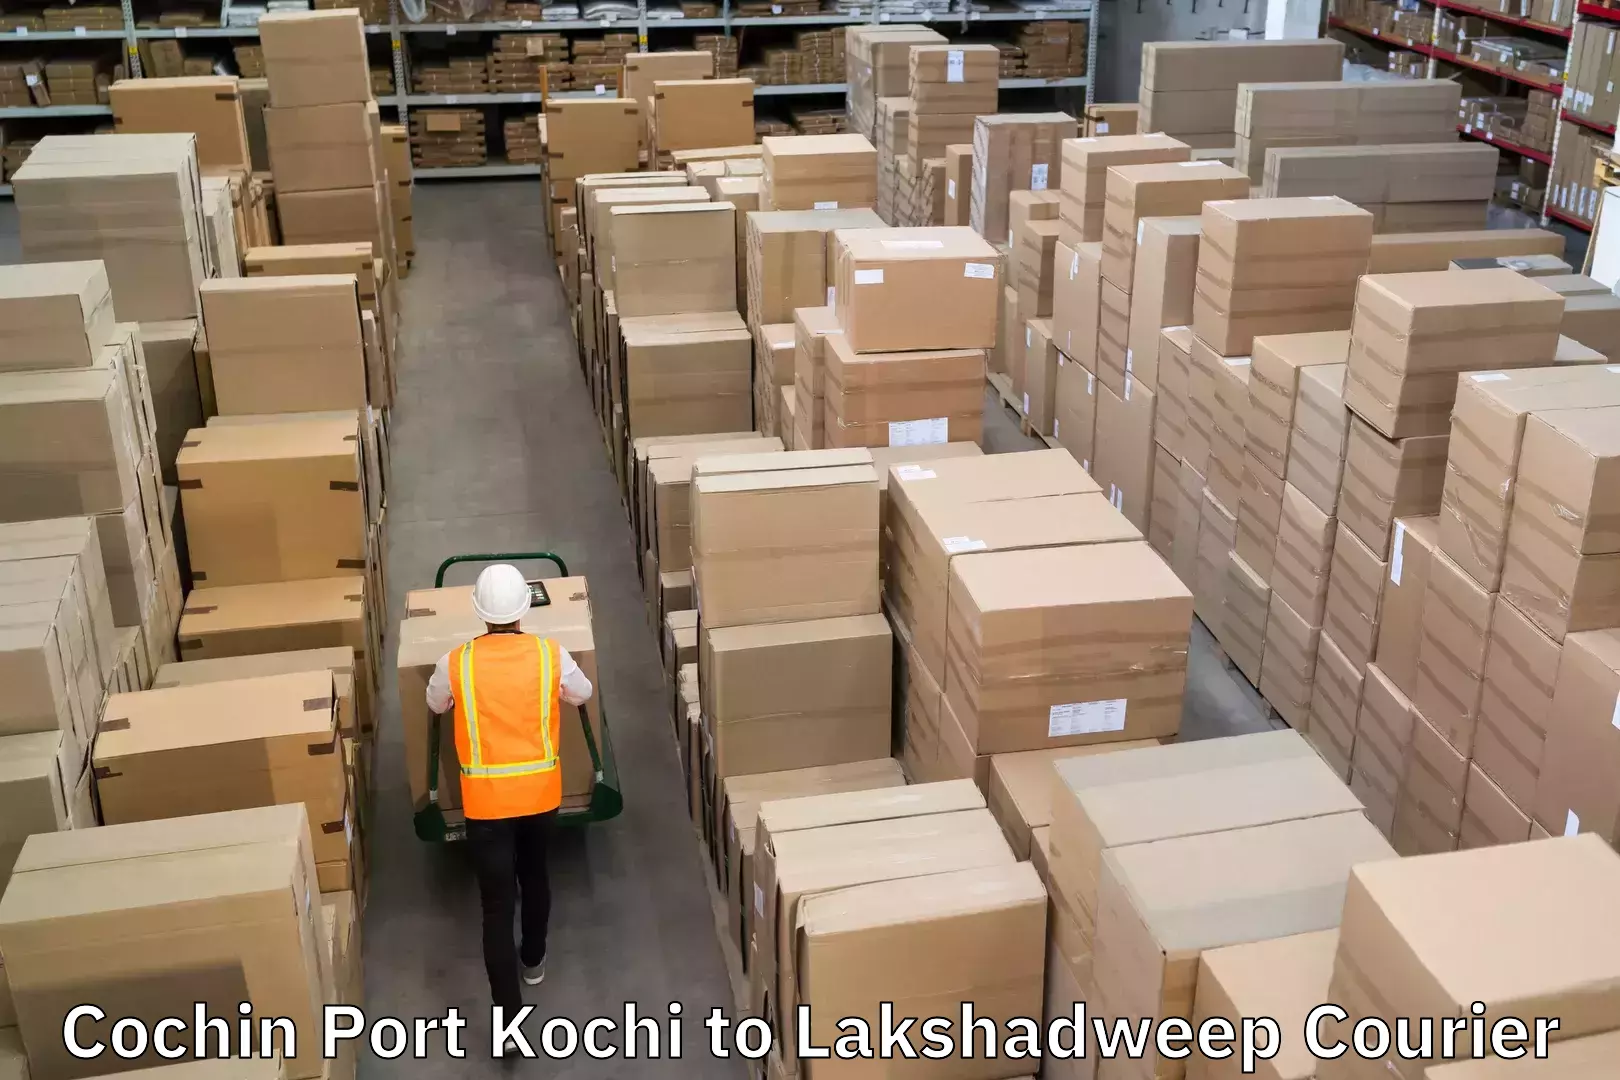 Express package handling in Cochin Port Kochi to Lakshadweep